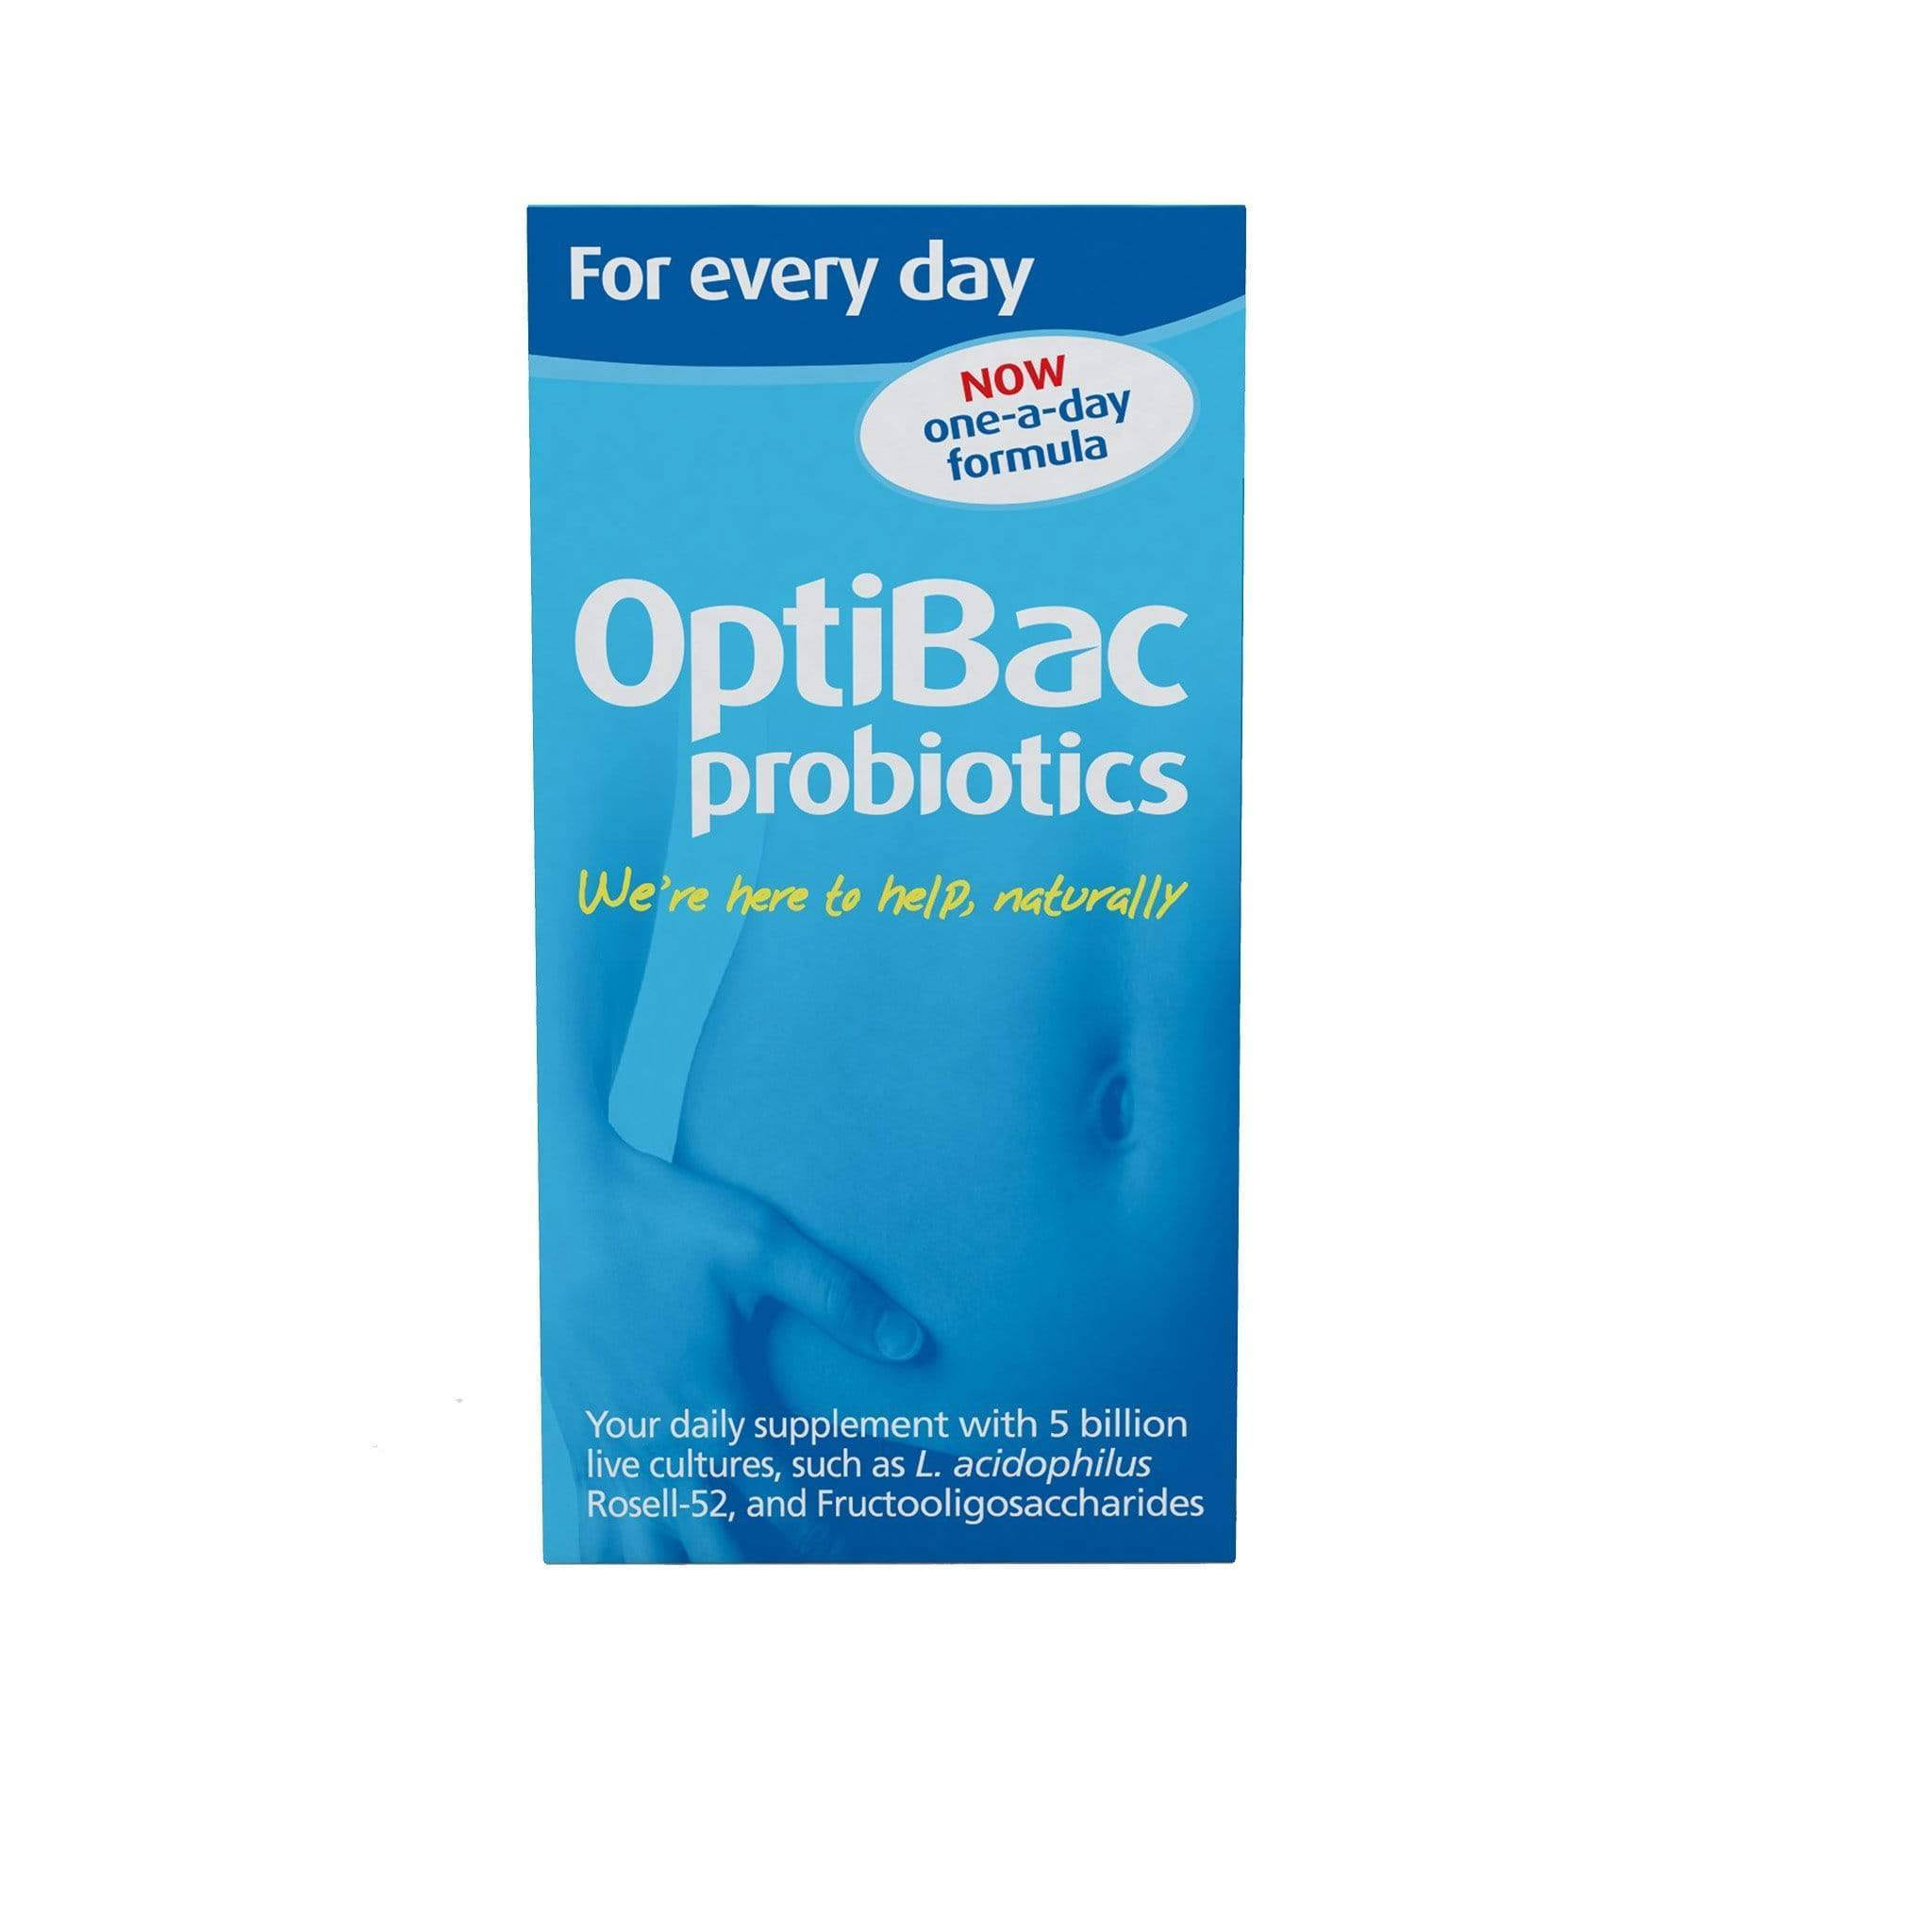 Optibac Probiotics for Every Day